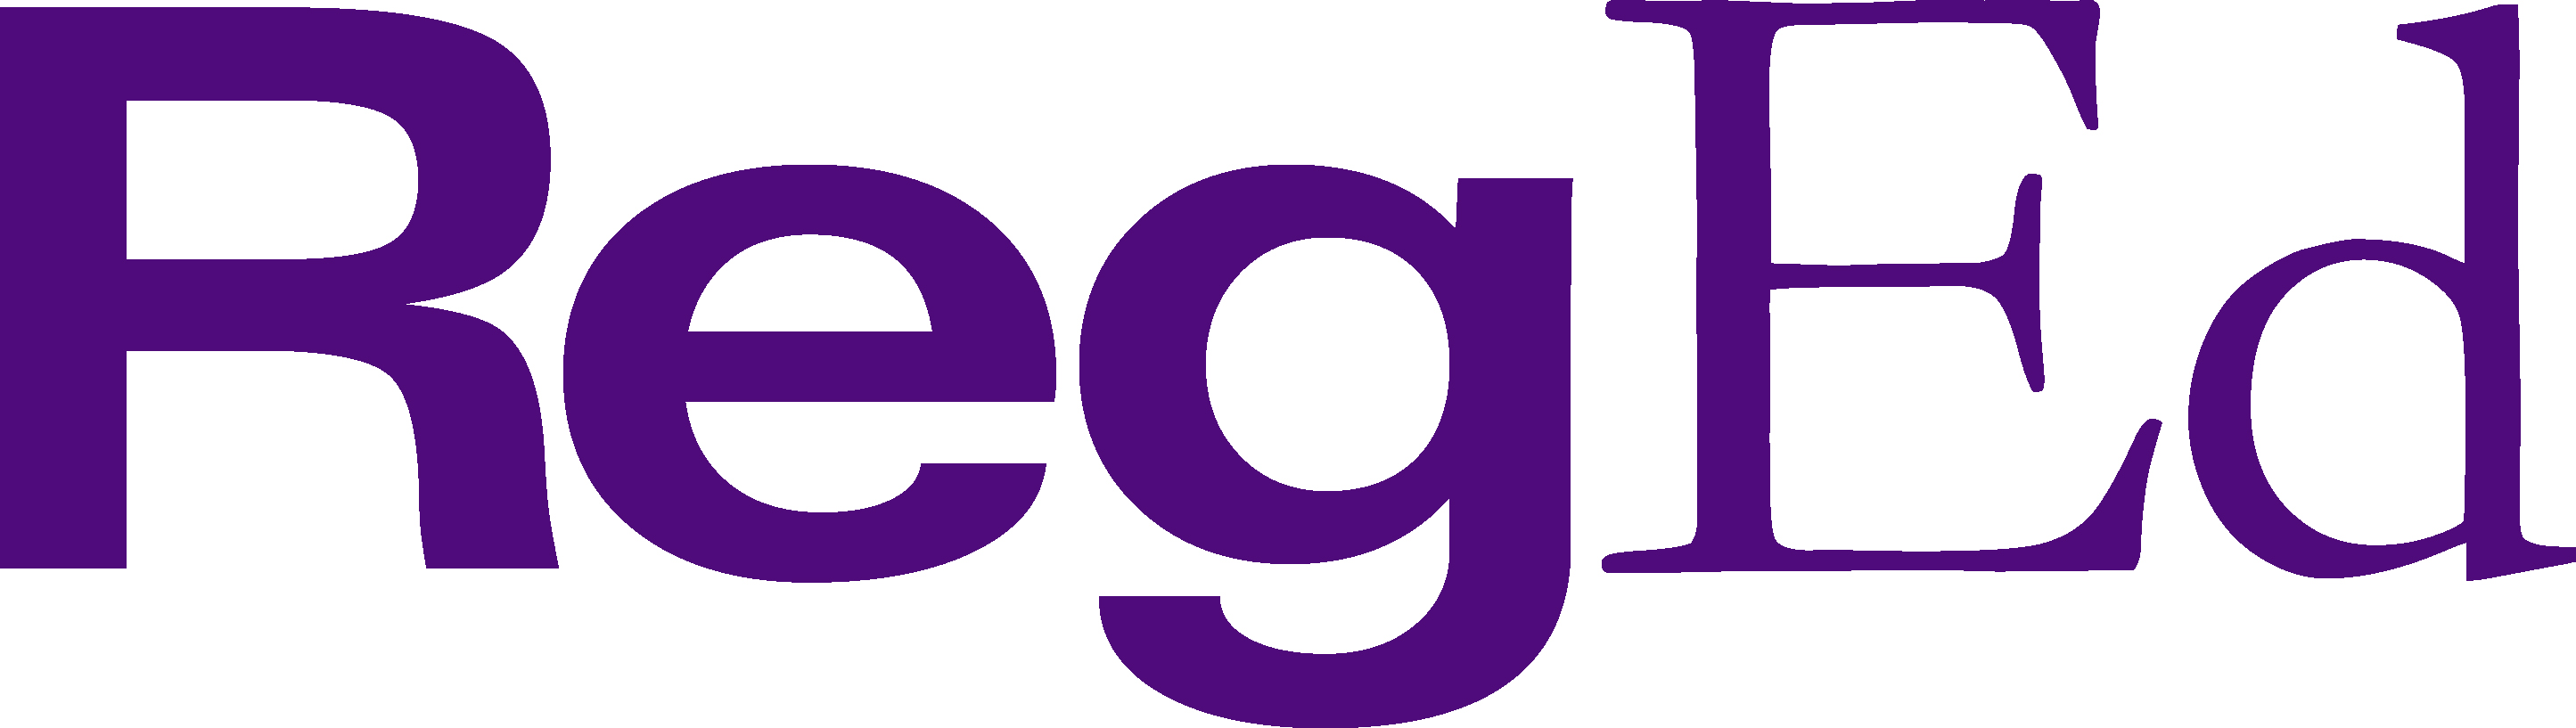 RegEd, Inc. logo